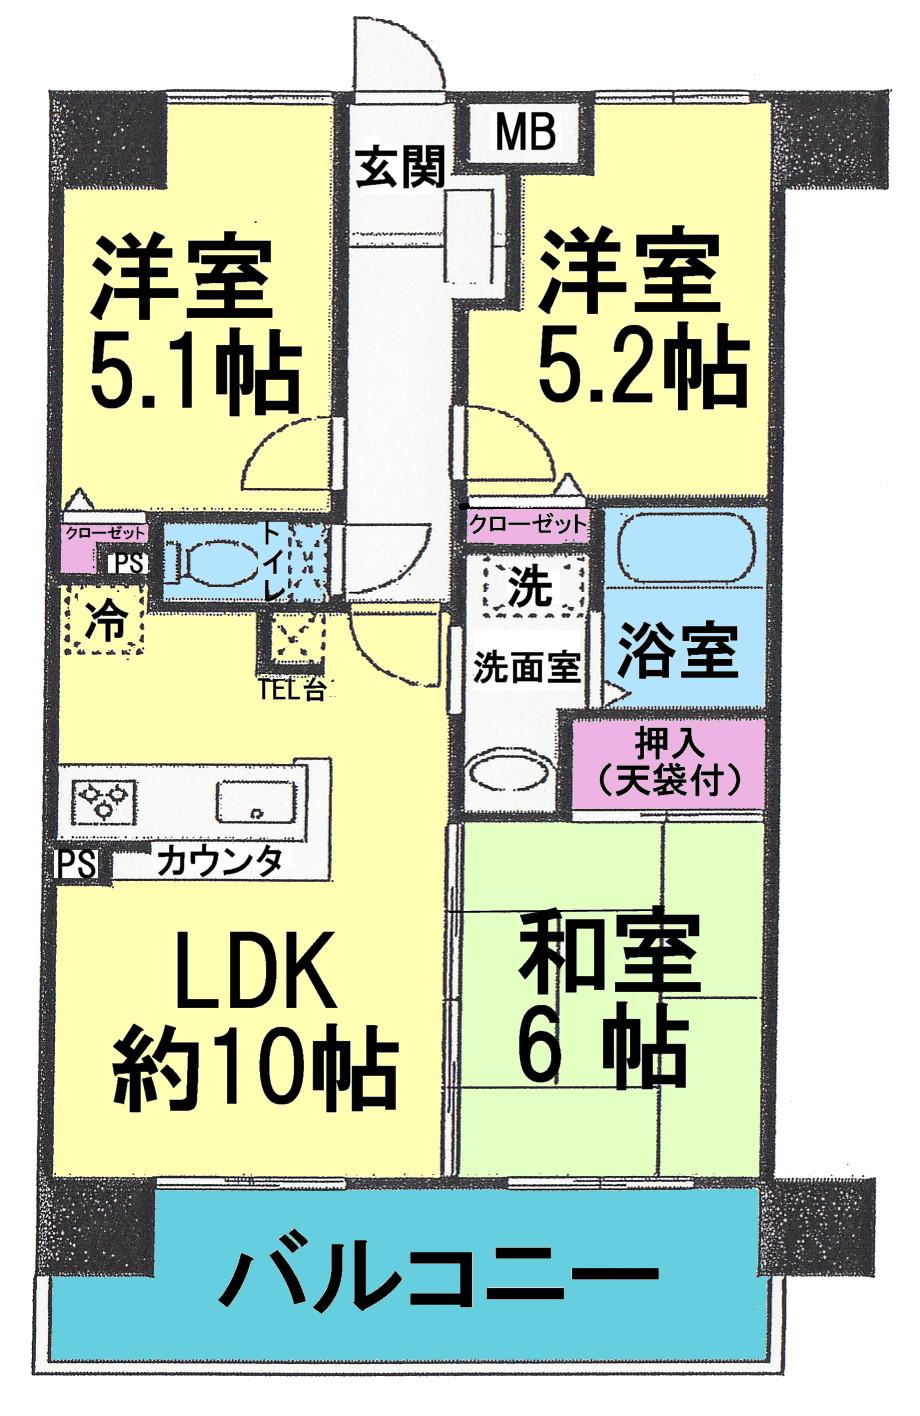 Floor plan. 3LDK, Price 8.5 million yen, Occupied area 56.79 sq m , Balcony area 9.2 sq m